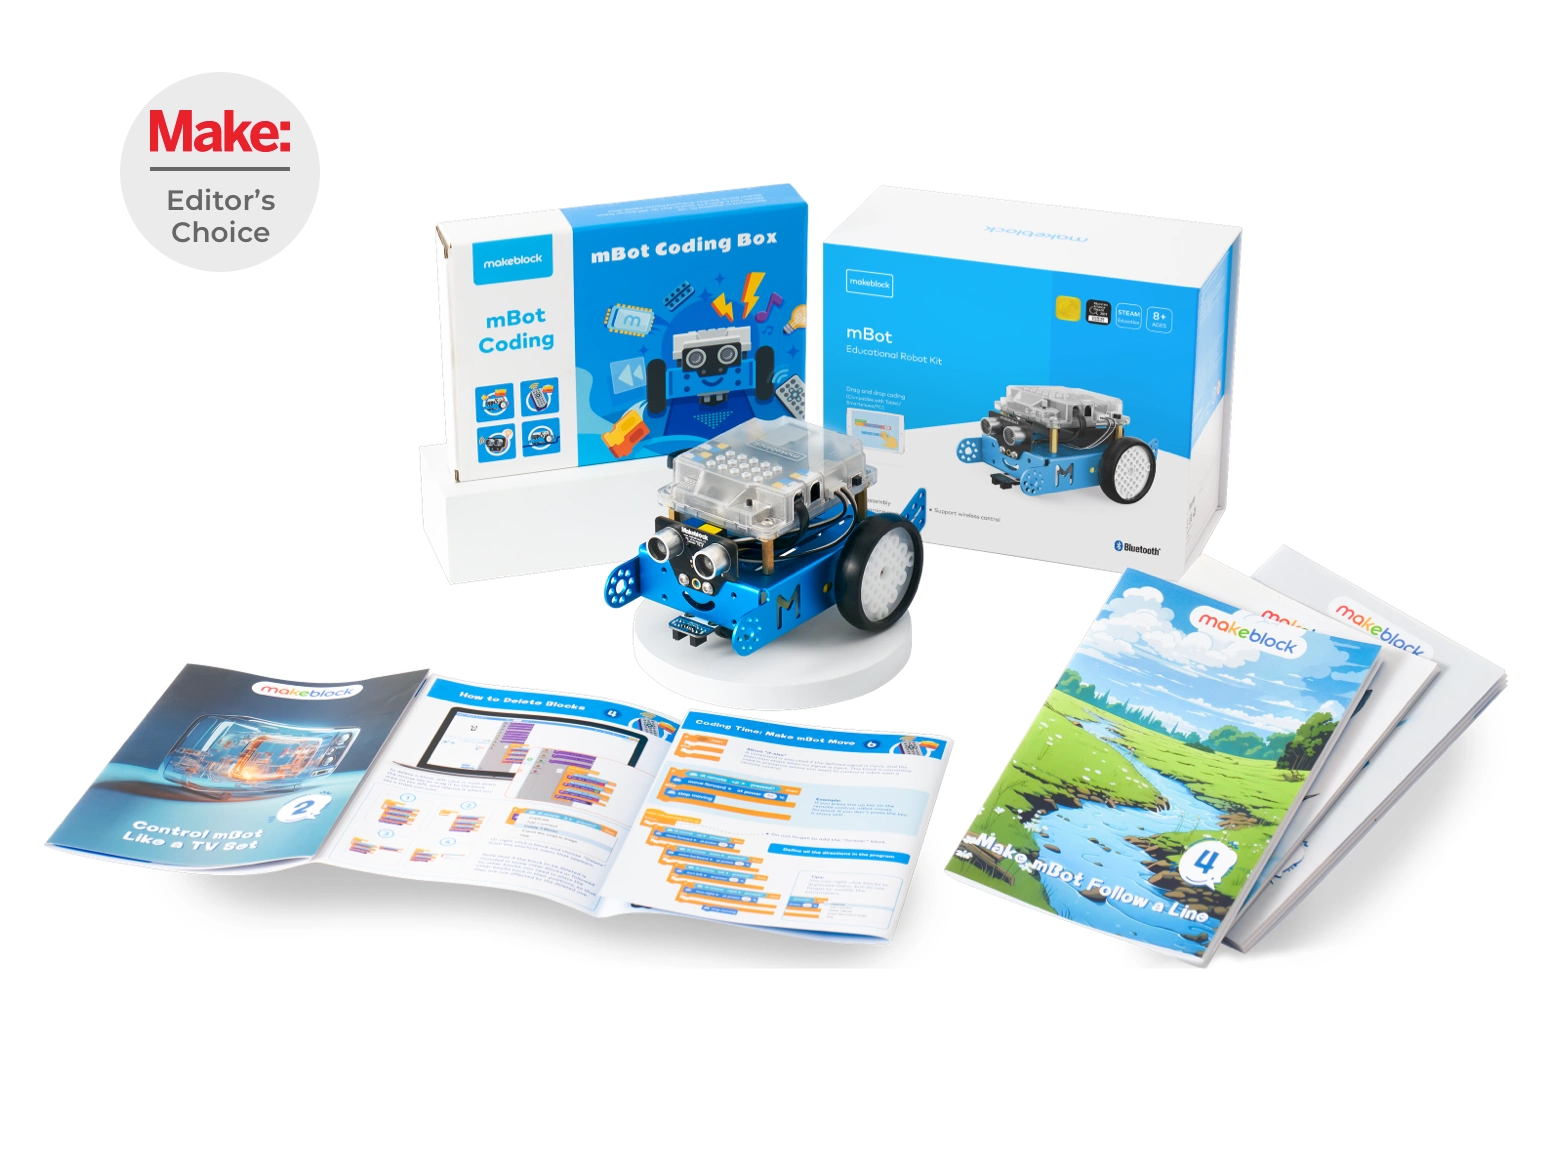 Makeblock mBot Educational Robot Kit STEM E-Commerce Bluetooth for Kids  Ages 8+